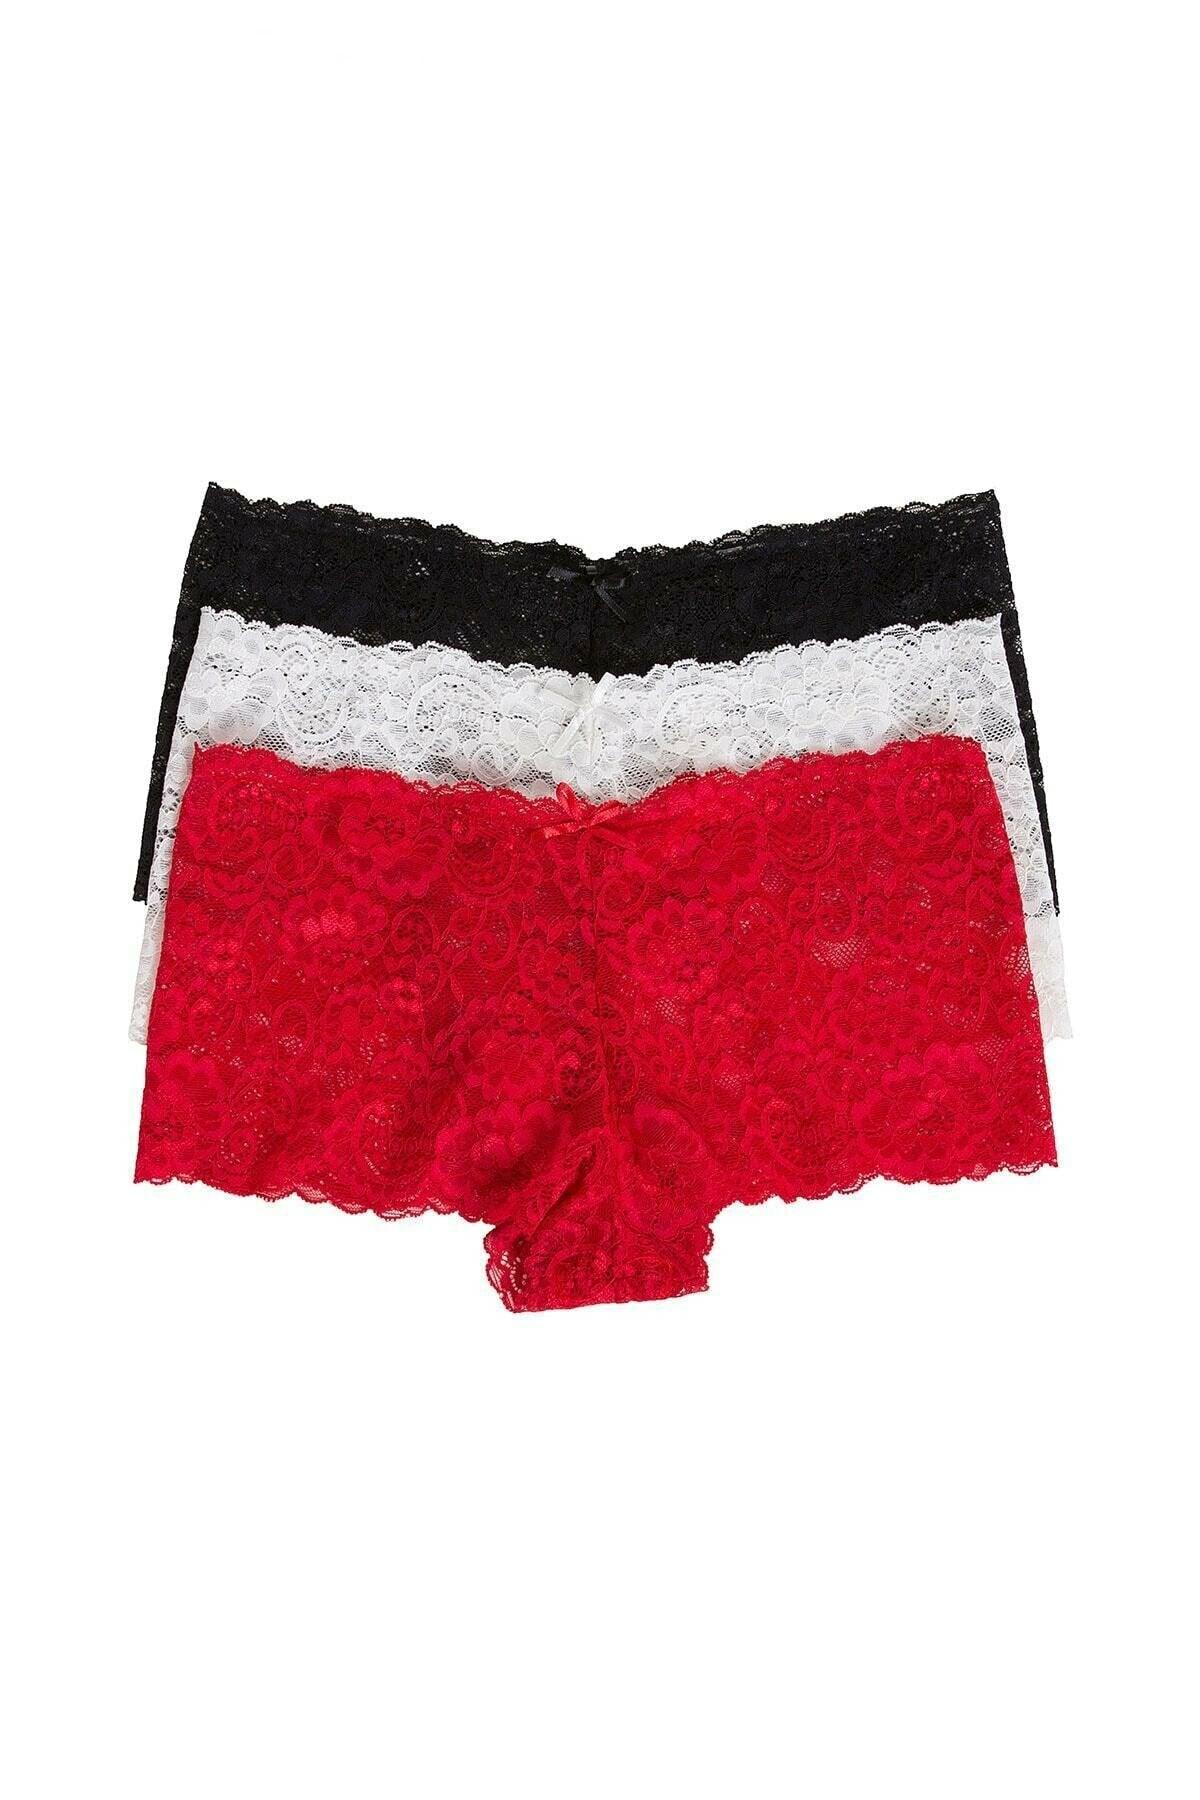 Women's Black White Red 3-Pack Lace Thong Shorts Panties - Swordslife